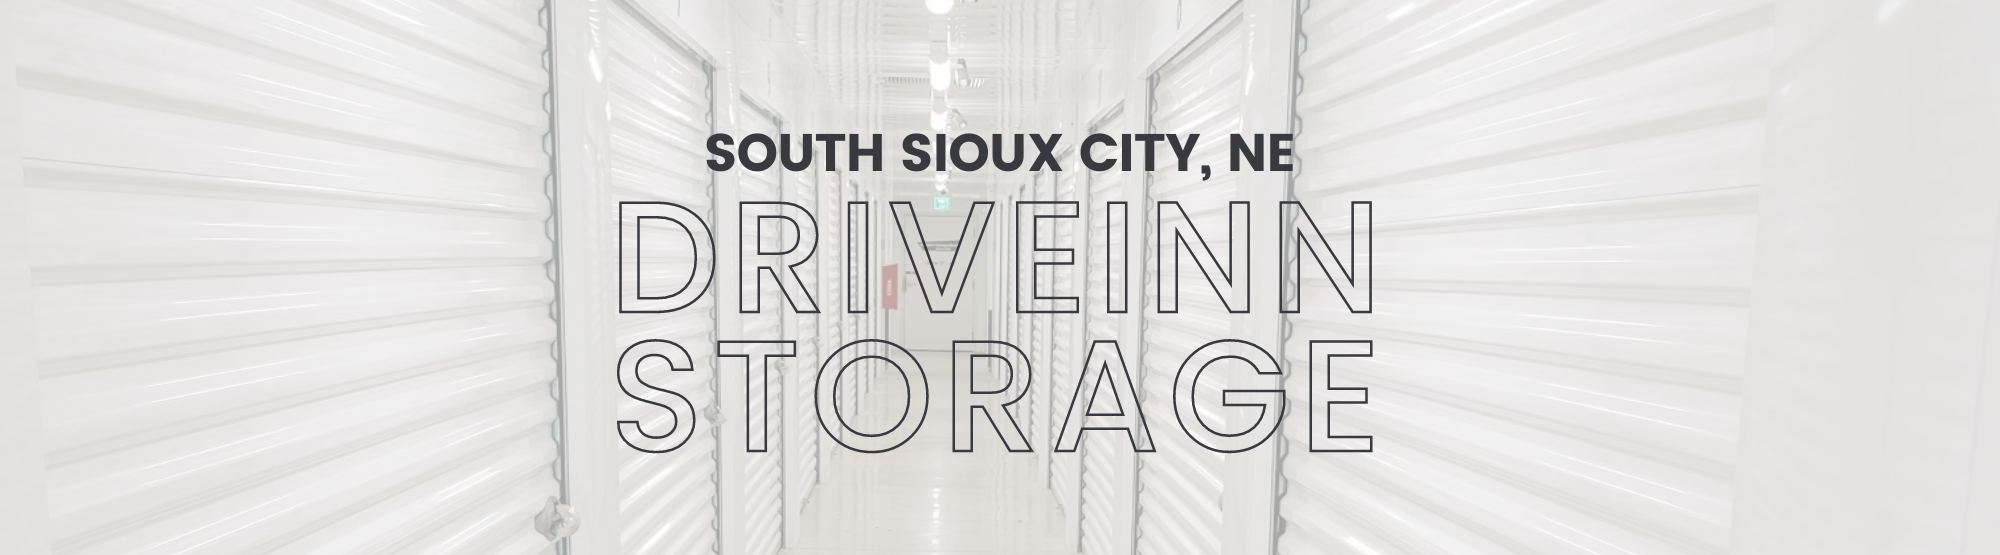 DriveInn Storage in South Sioux City, ND